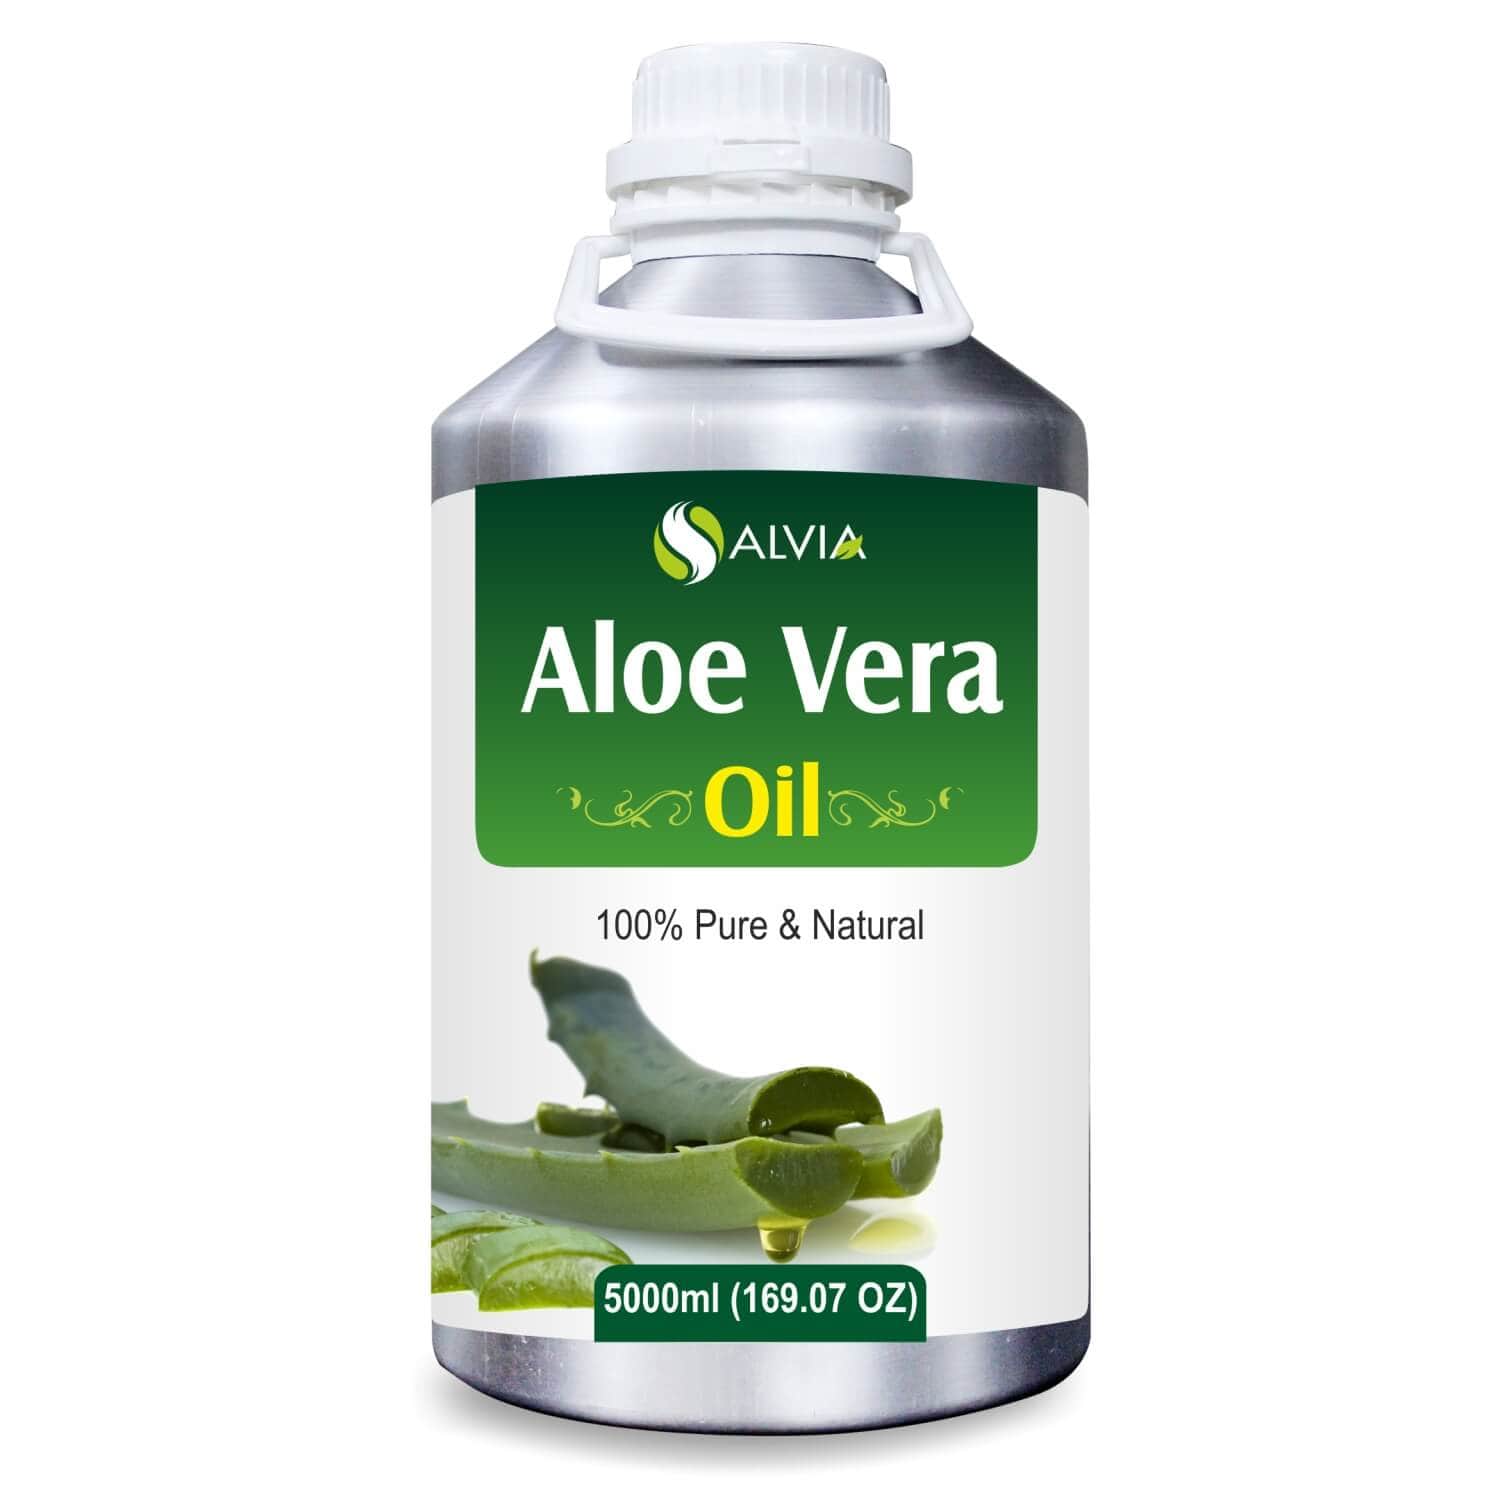 Salvia Natural Carrier Oils 5000ml Aloe Vera Oil (Aloe Barbadensis) 100% Pure & Natural Carrier Oil